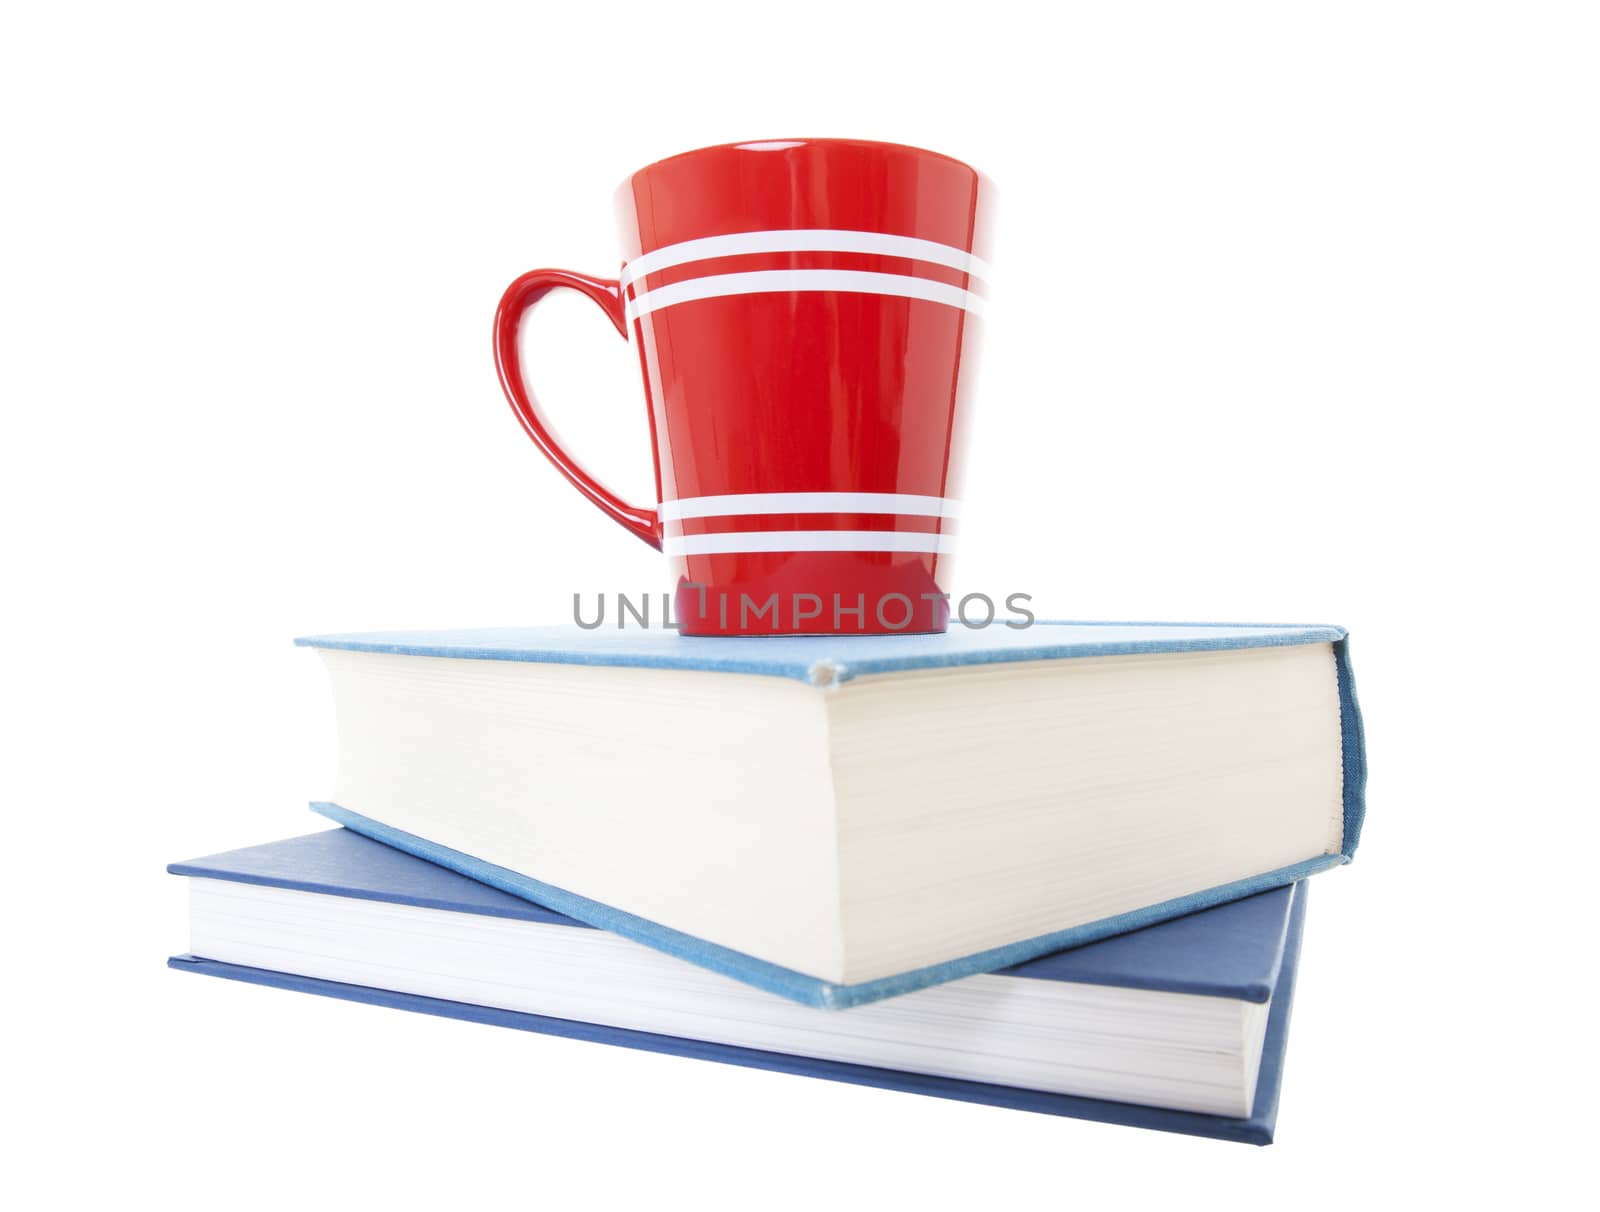 Text Books and Coffee Mug by songbird839